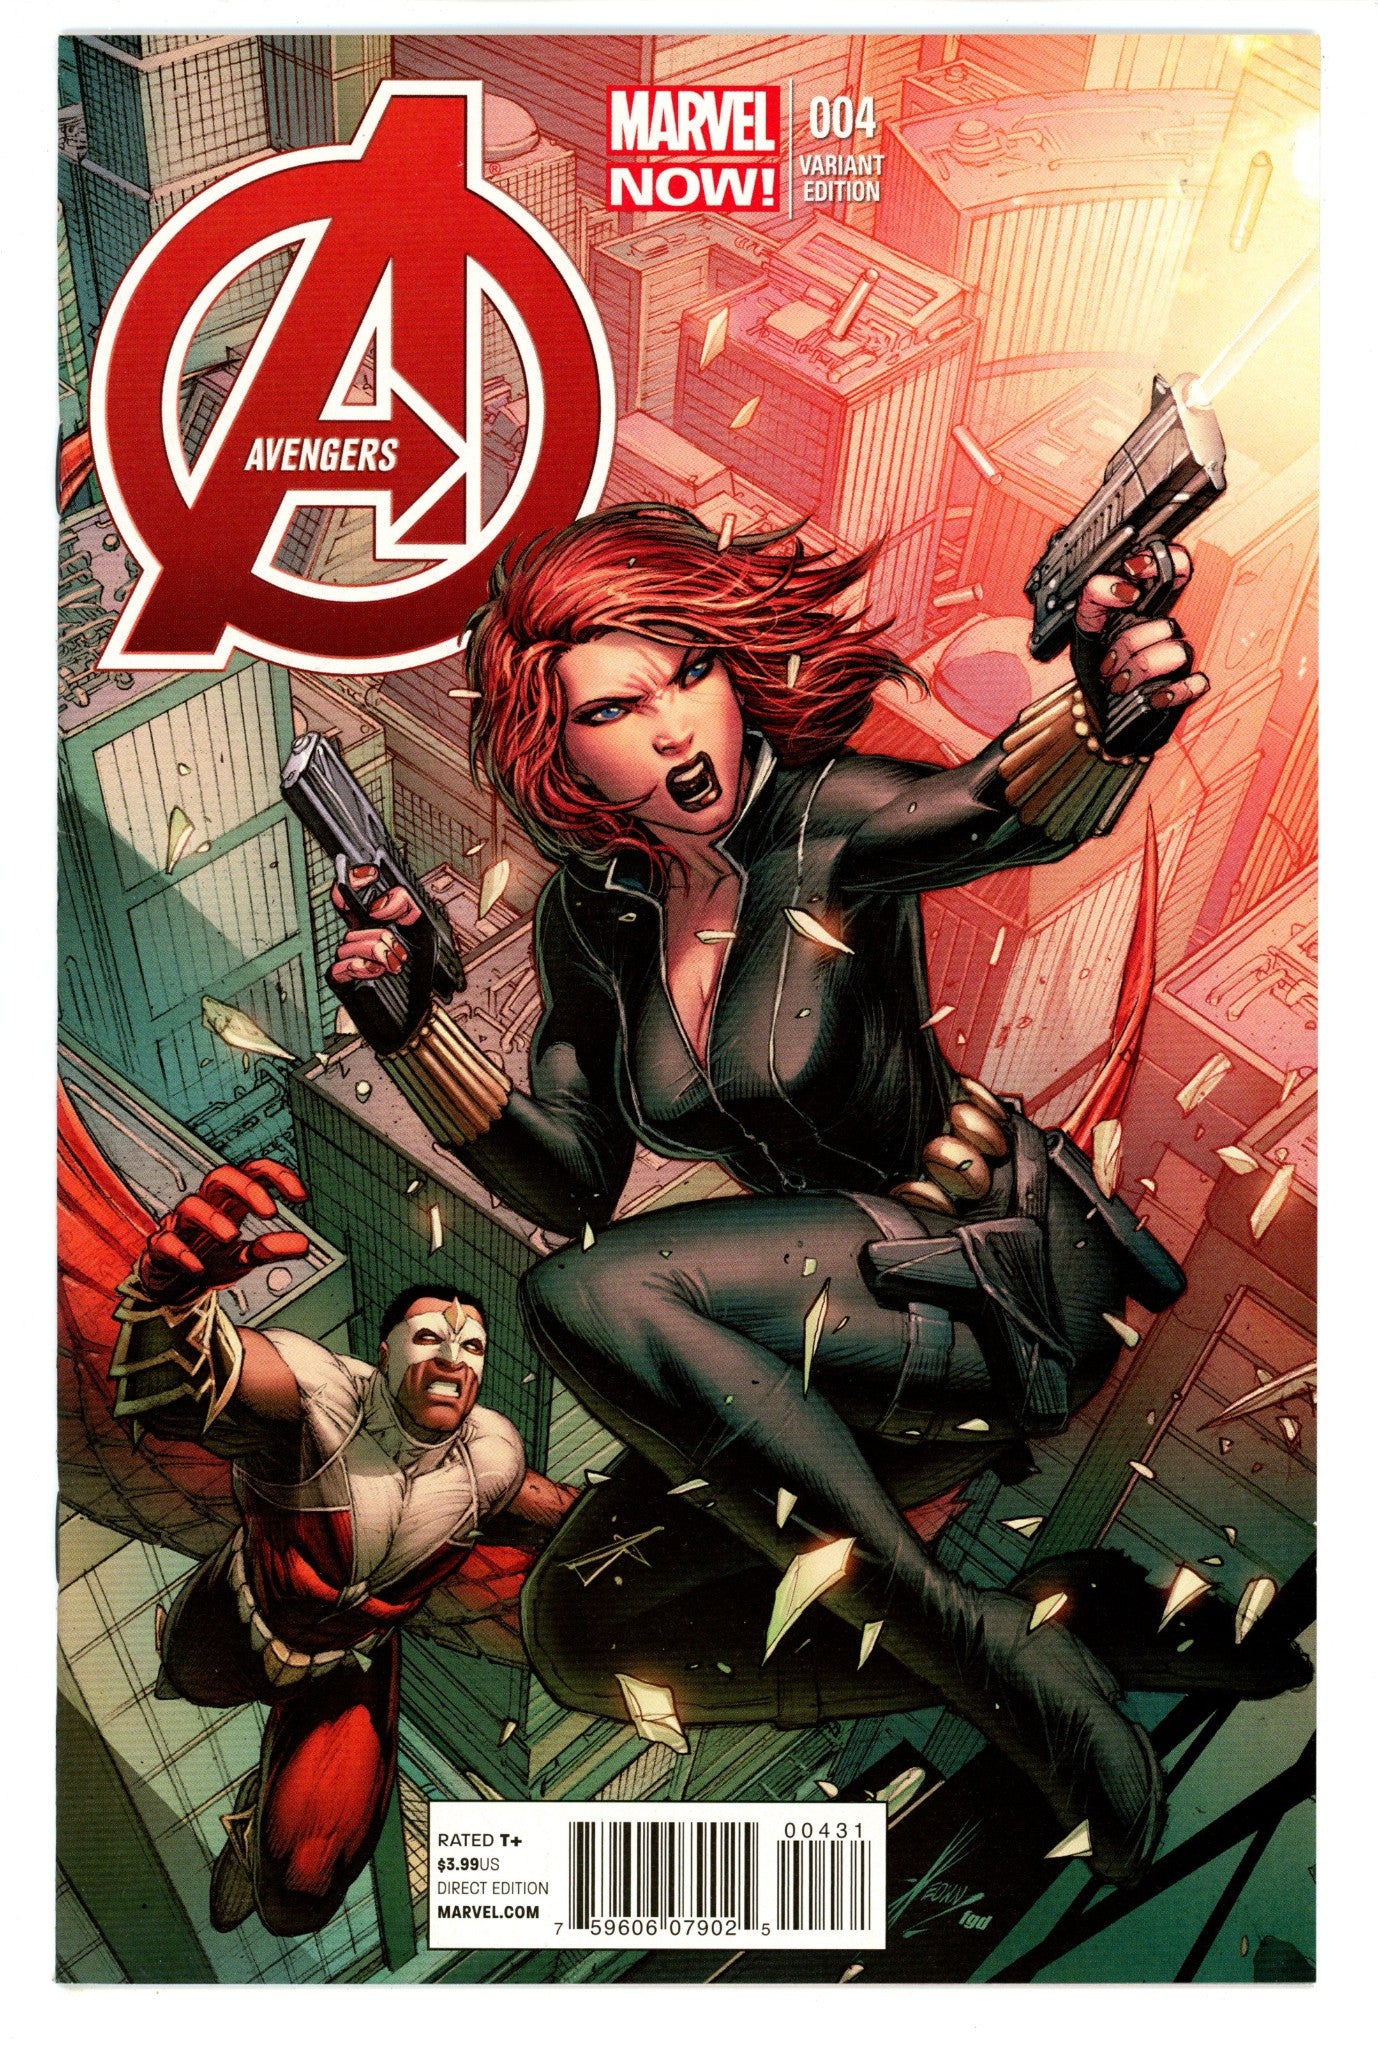 Avengers Vol 5 4 NM- (9.2) (2013) Keown Incentive Variant 